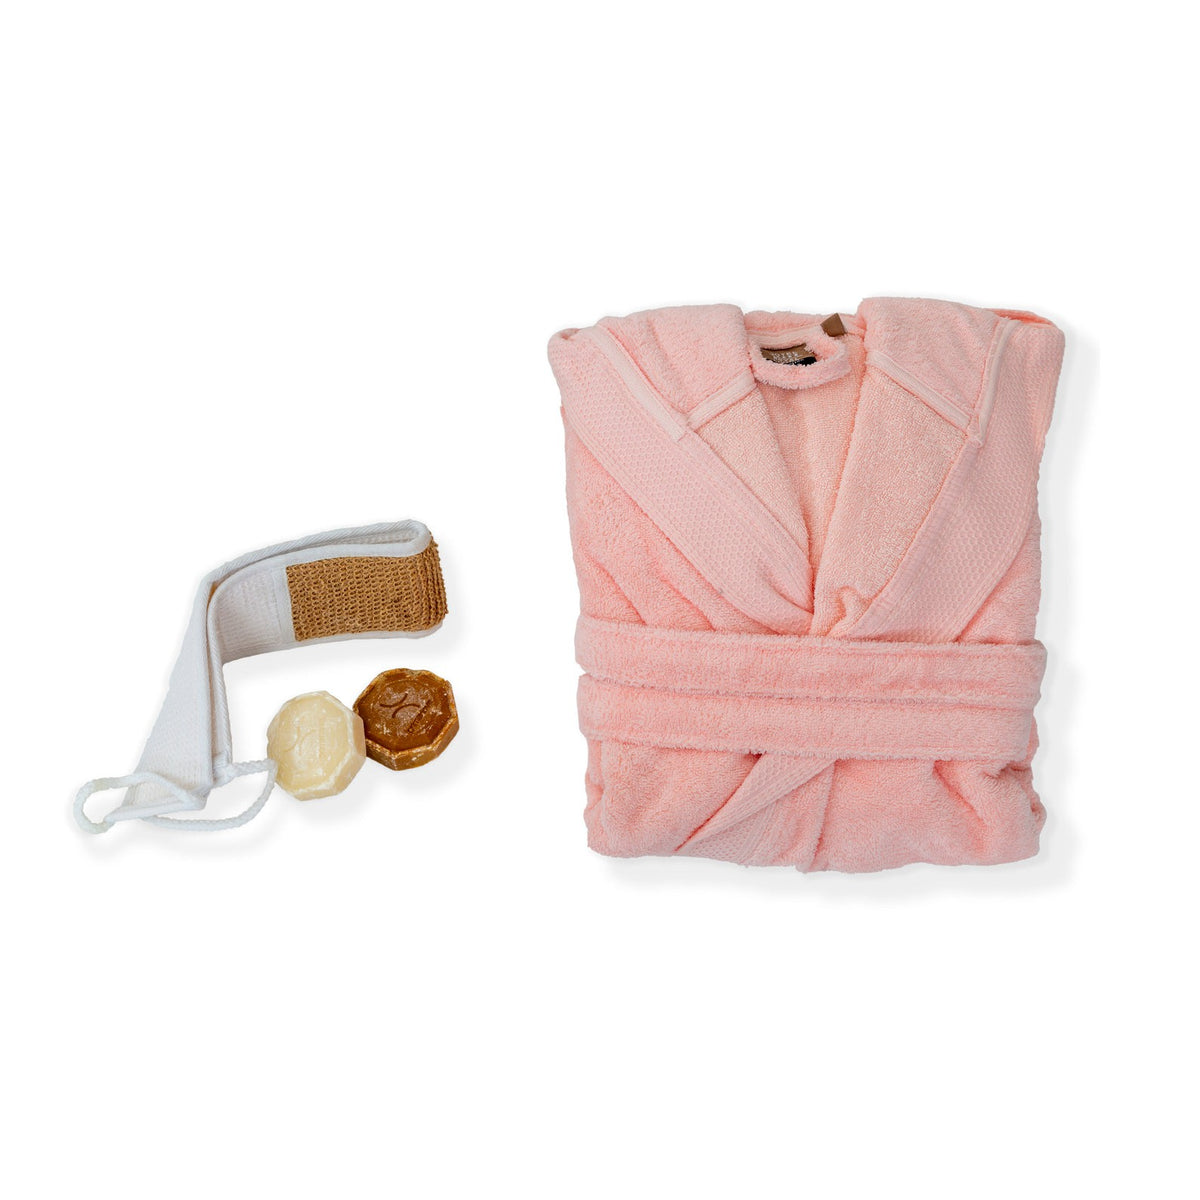 HOTEL ROYAL LIVING Microvelour Bath Robe & Slippers Gift Box